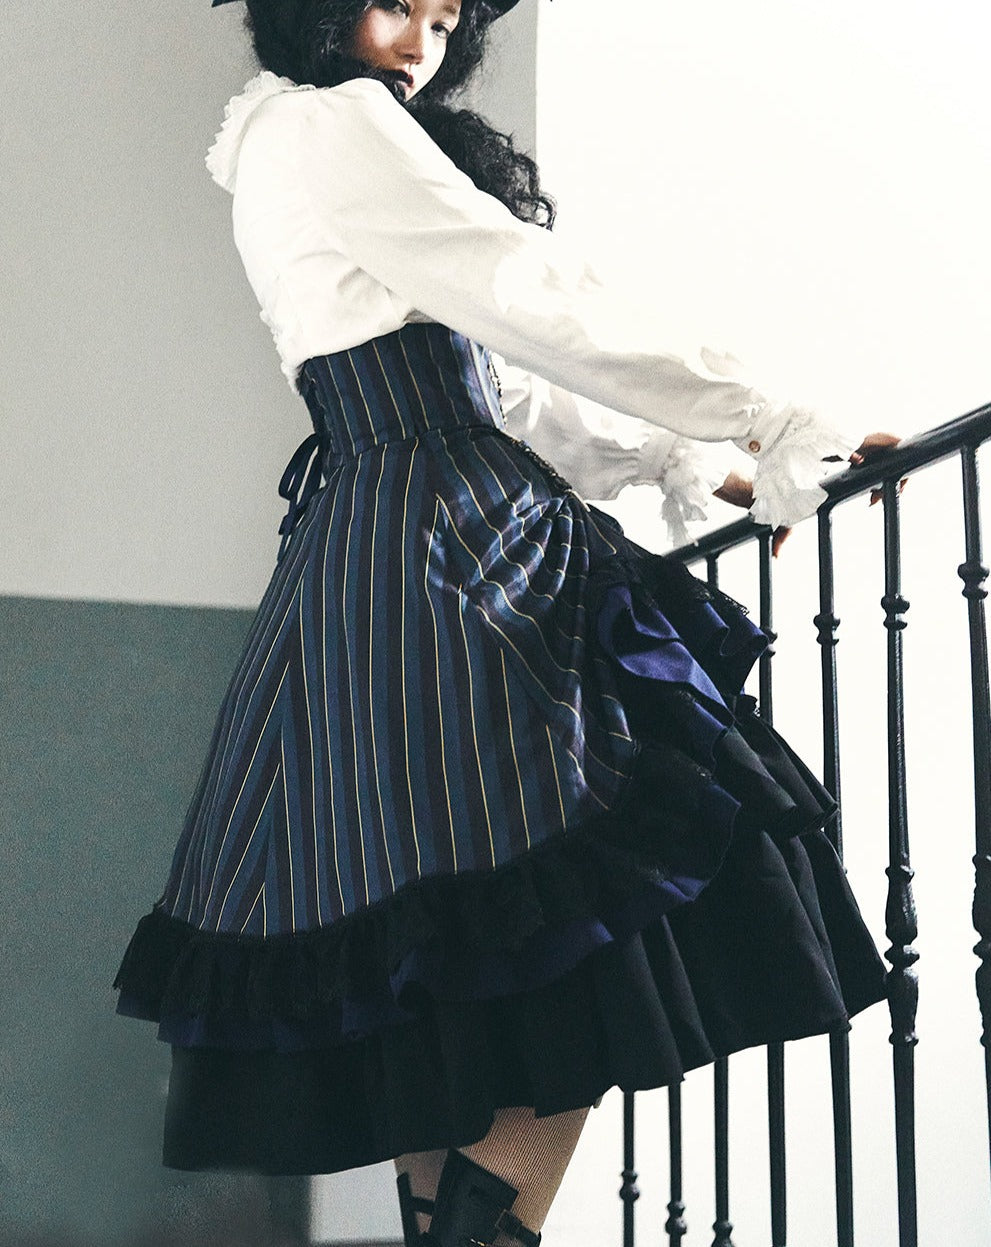 Surface Spell -Gothic Academy- Striped Lolita High Waist Skirt